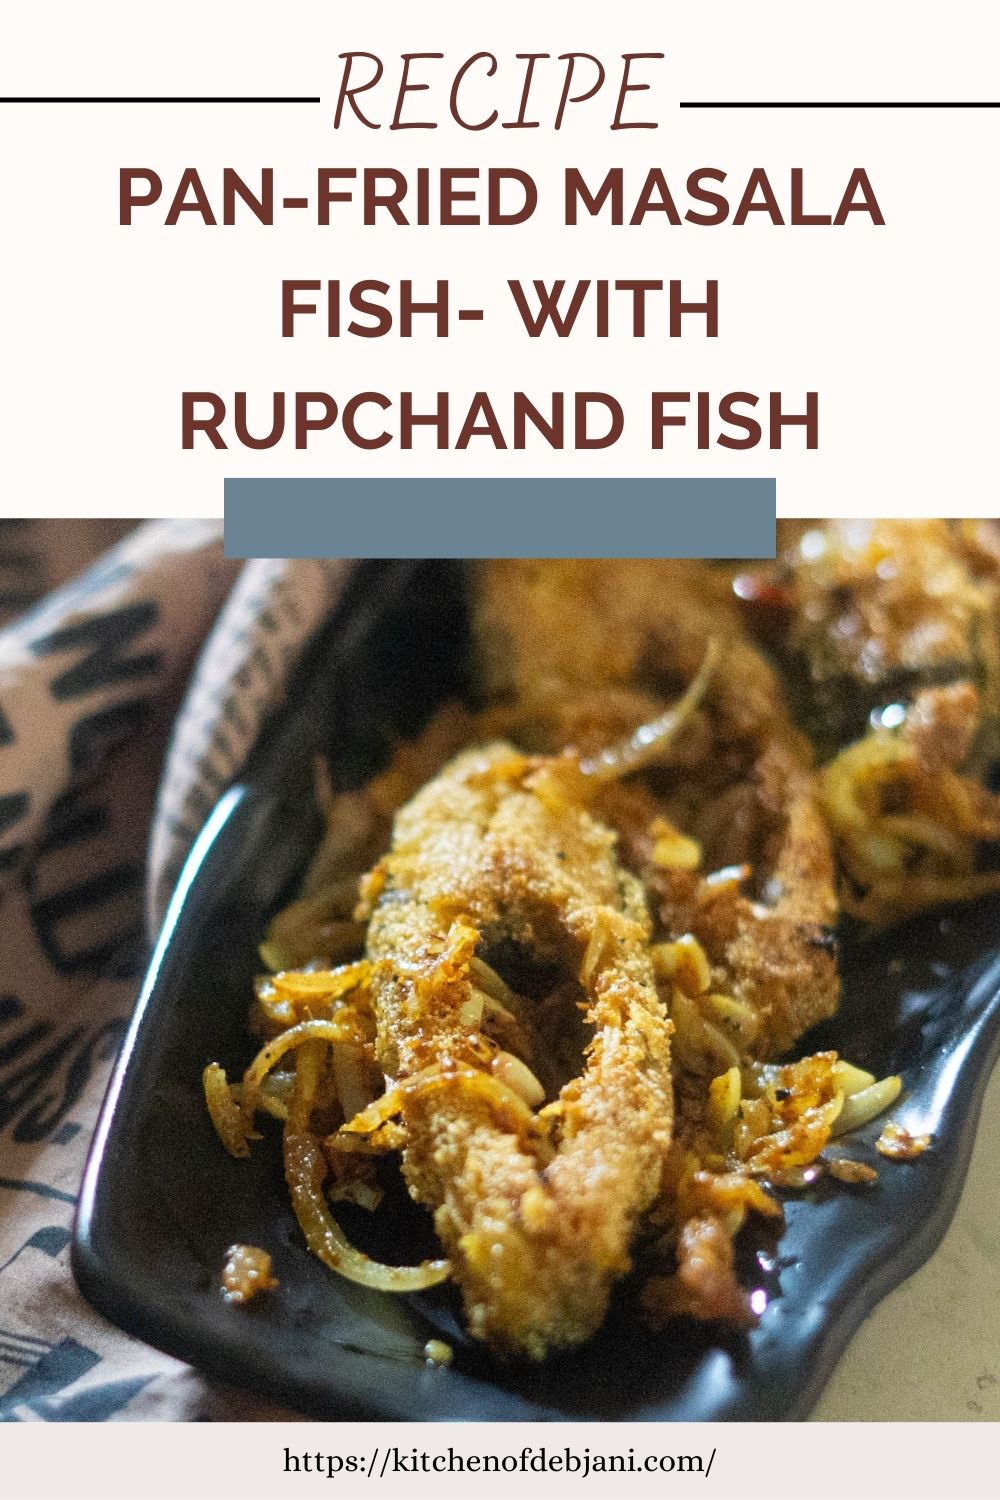 %Pan-fried masala fish with Rupchand fish pinterest pin recipe